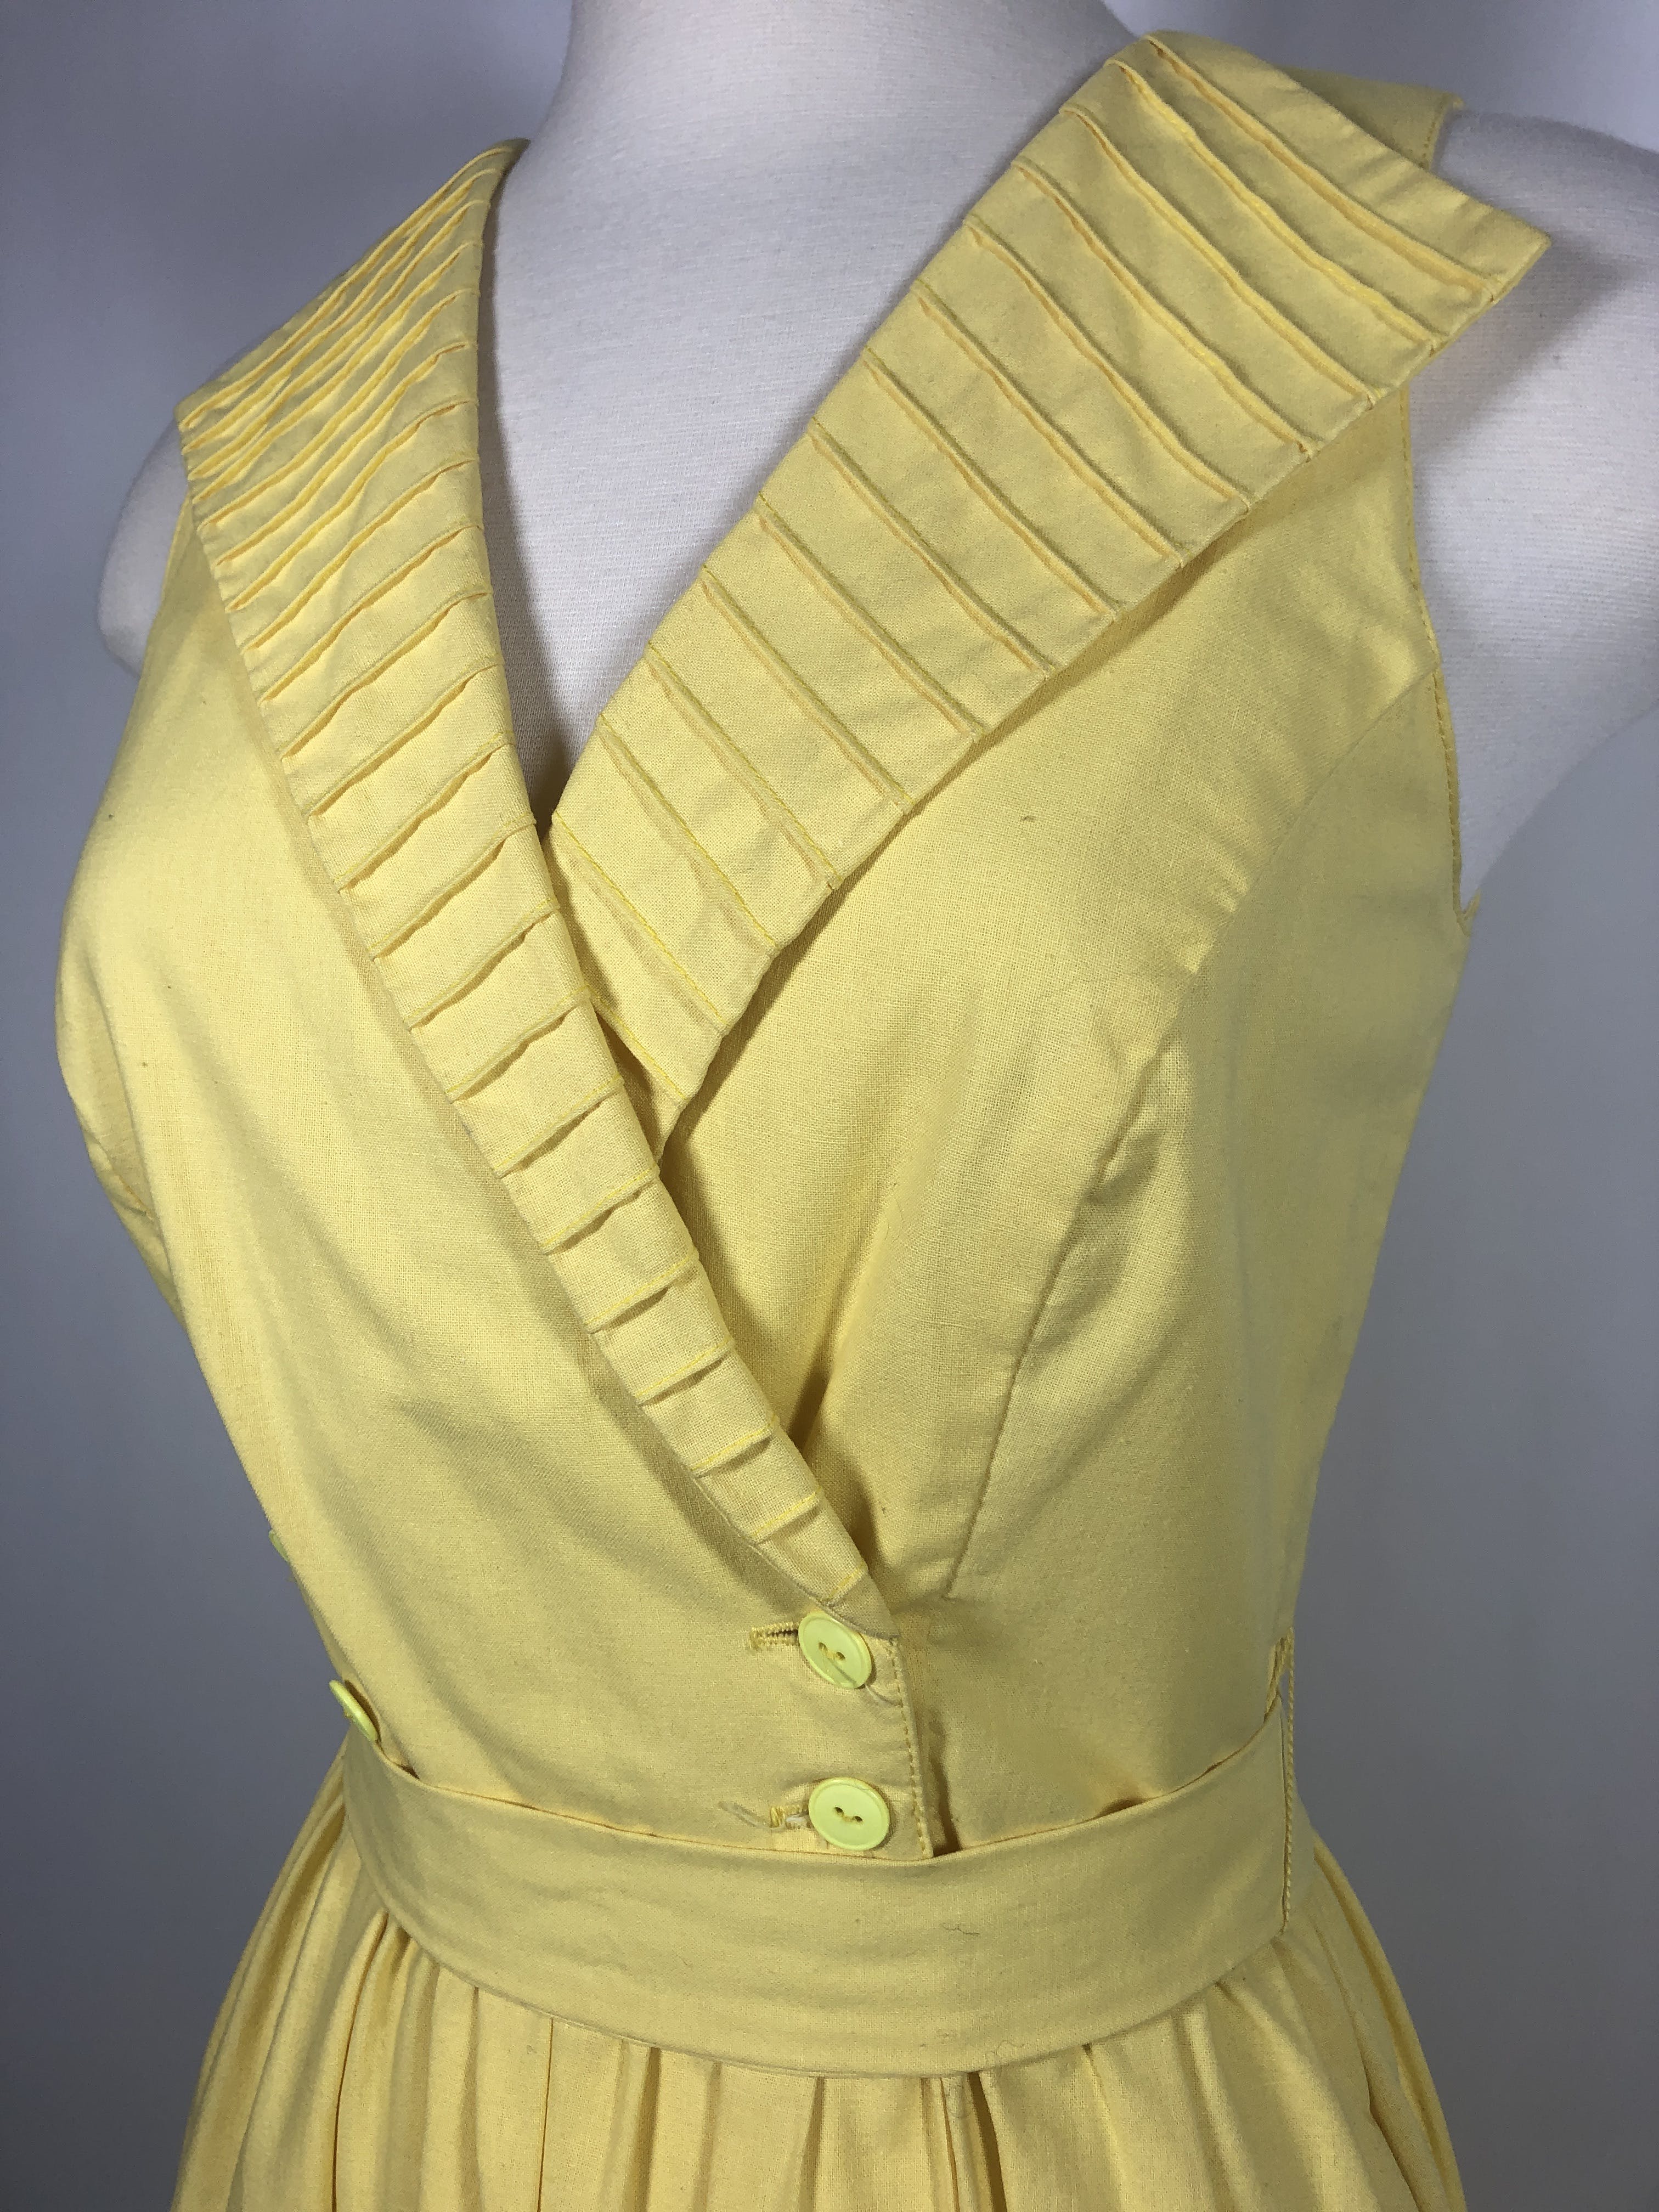 yellow collared dress